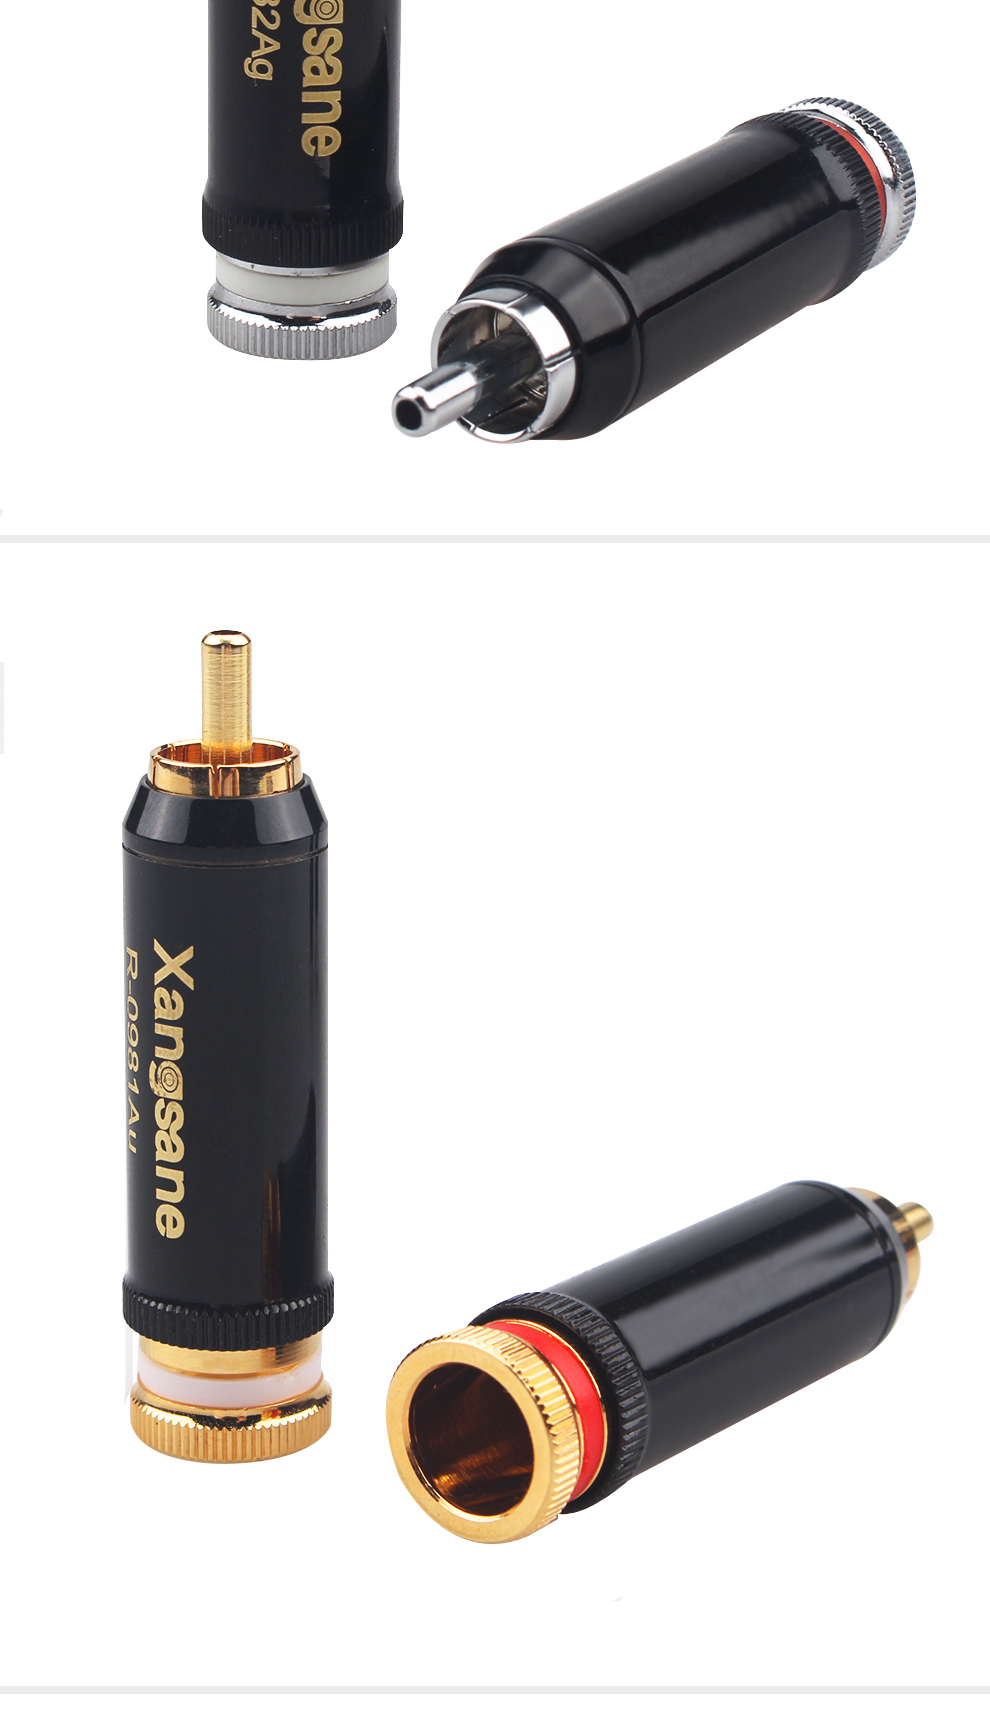 Xangsane-4pcs-from-gold-platedrhodium-plated-self-locking-RCA-lotus-HiFi-audio-signal-cable-plug-fever-audio-DIY-accessories-2255800293021551